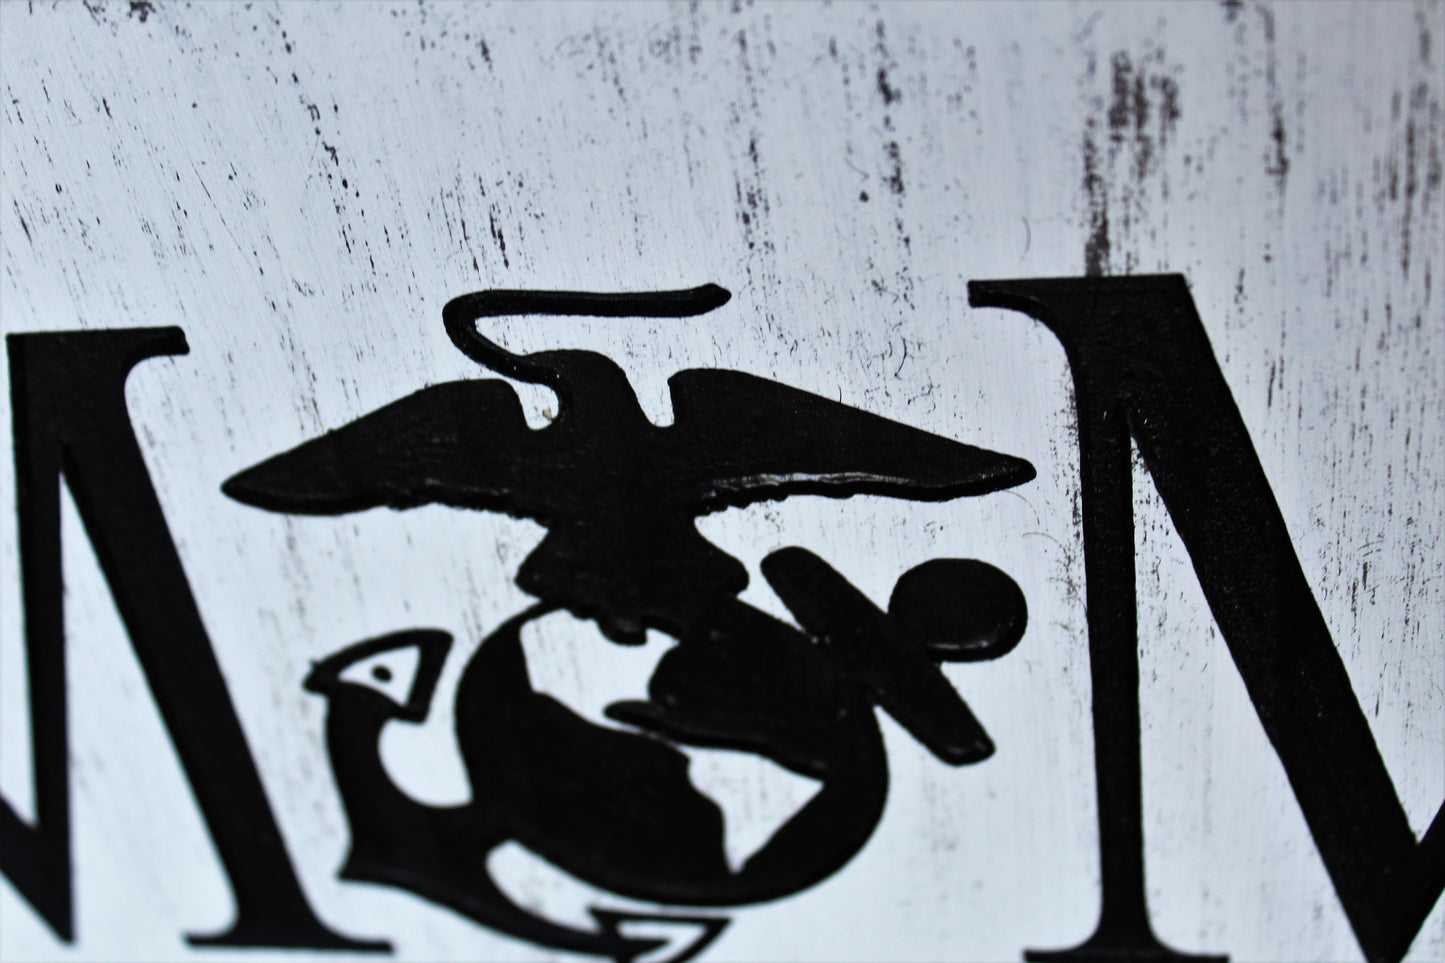 Marine Mom Rustic Wood Engraved Sign, Proud Marine Mom